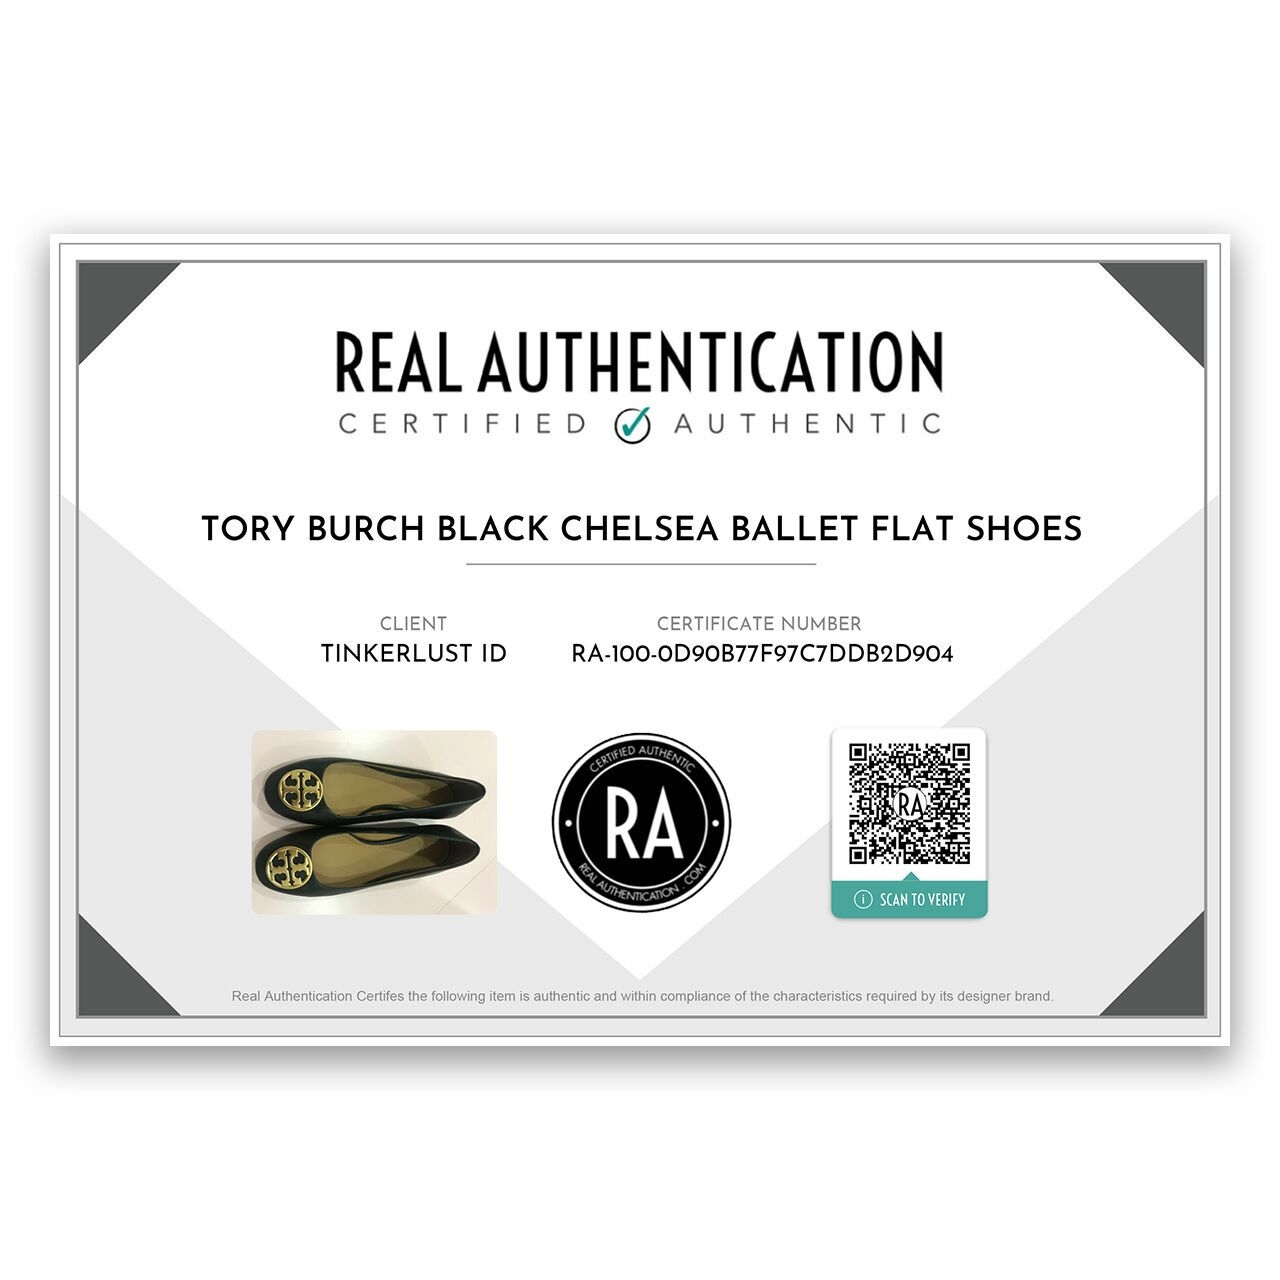 Tory Burch Black Chelsea Ballet Flat Shoes